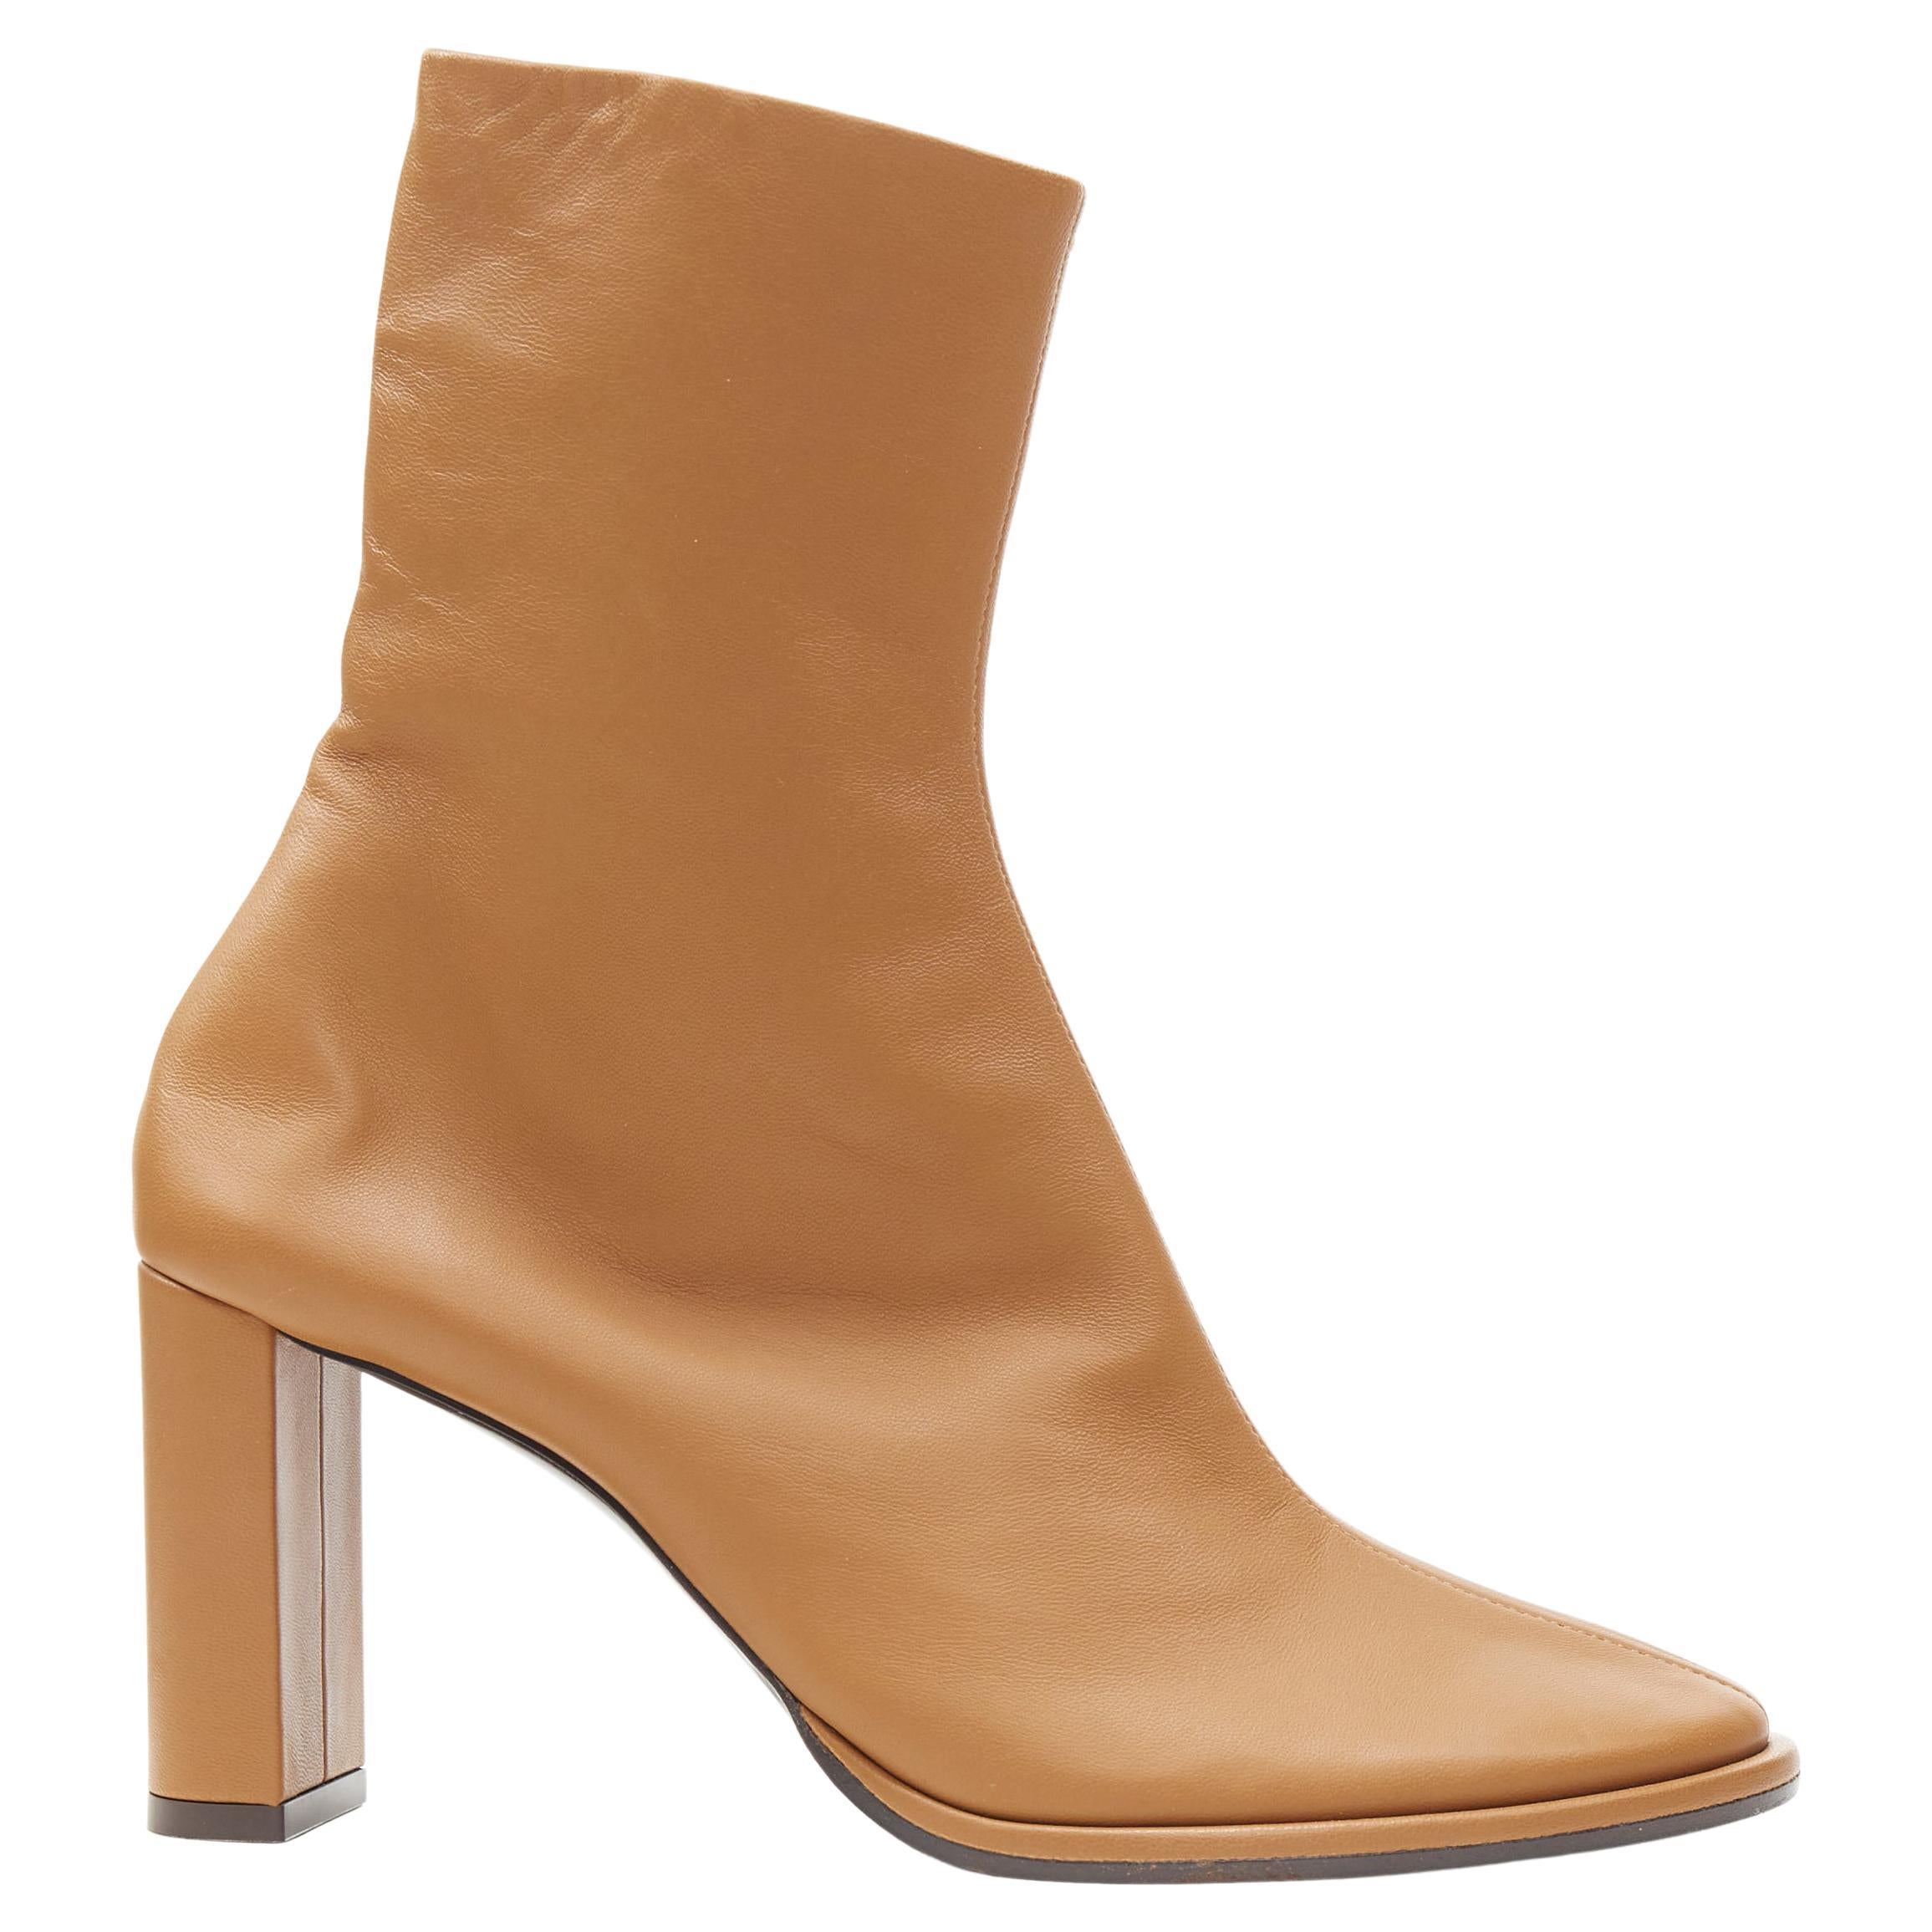 Womens knee-high boots, brown elle boots / Dear Frances designer boots